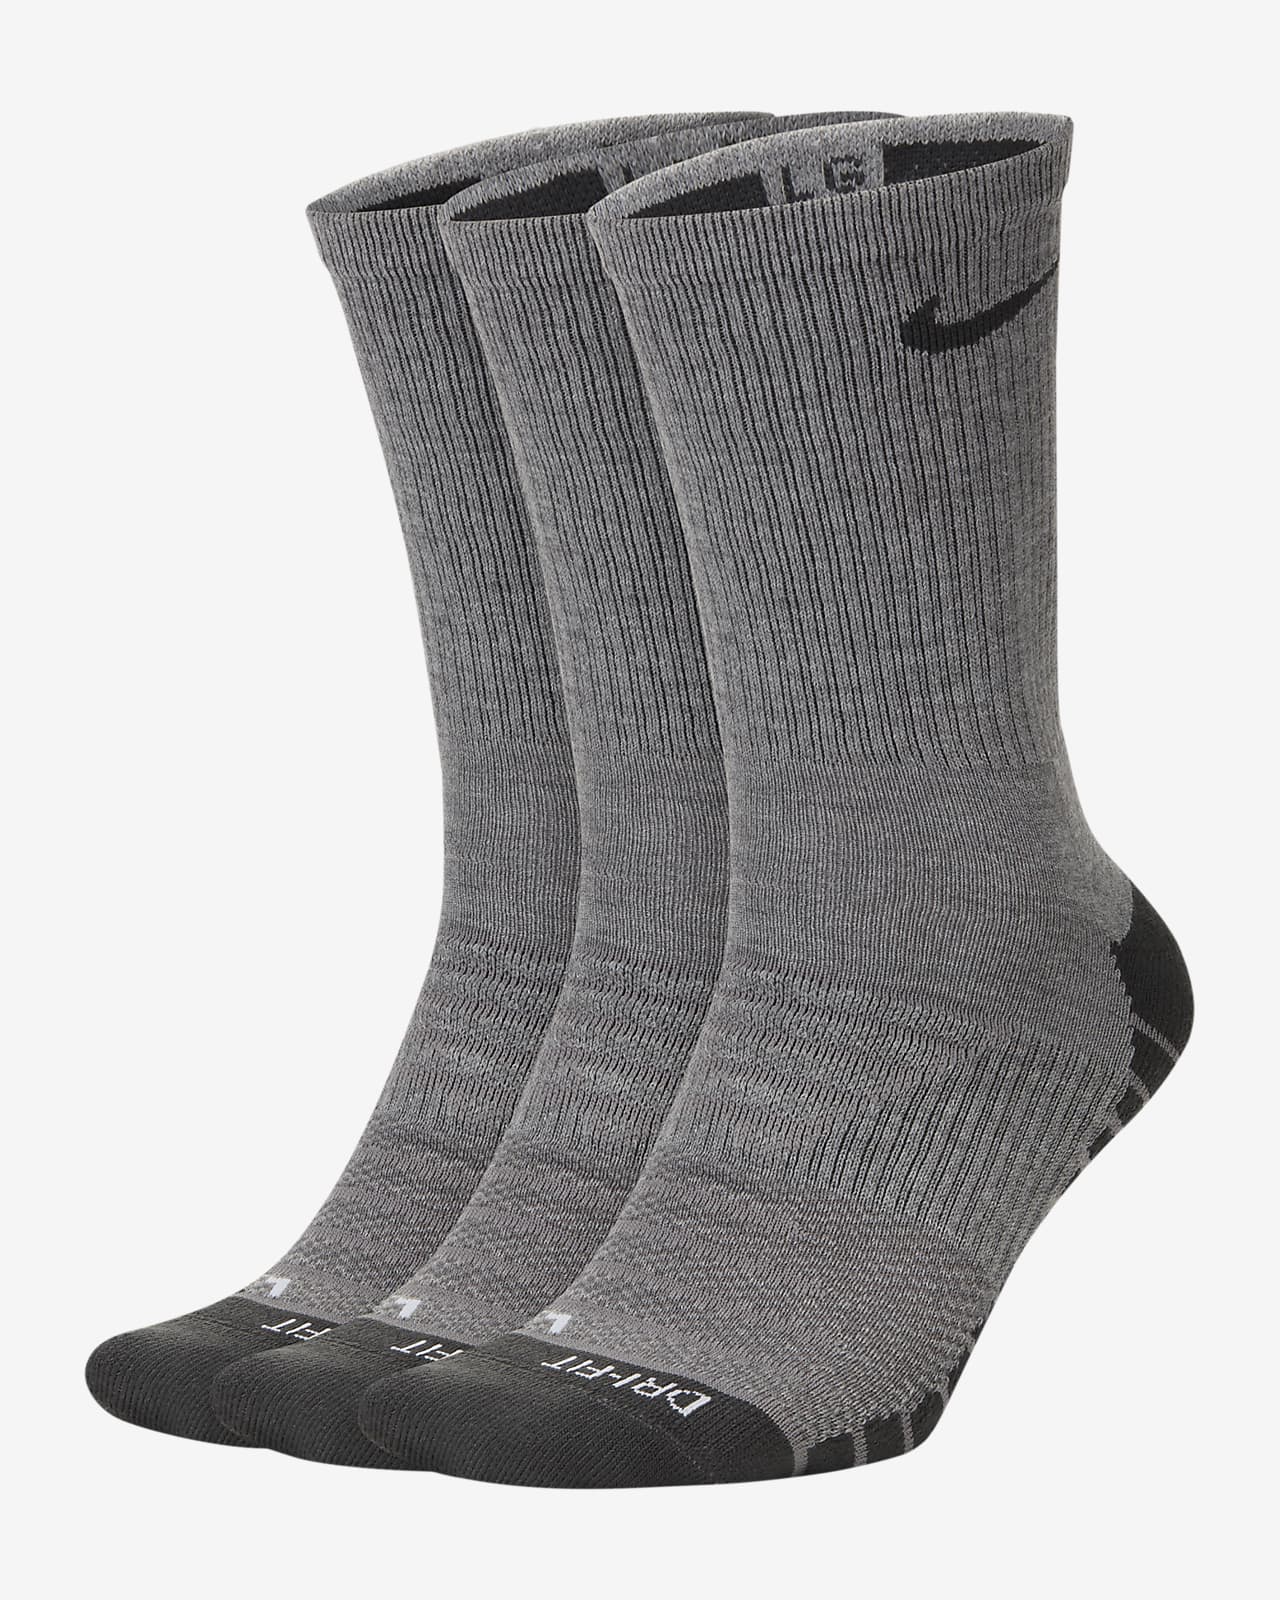 double check nike socks